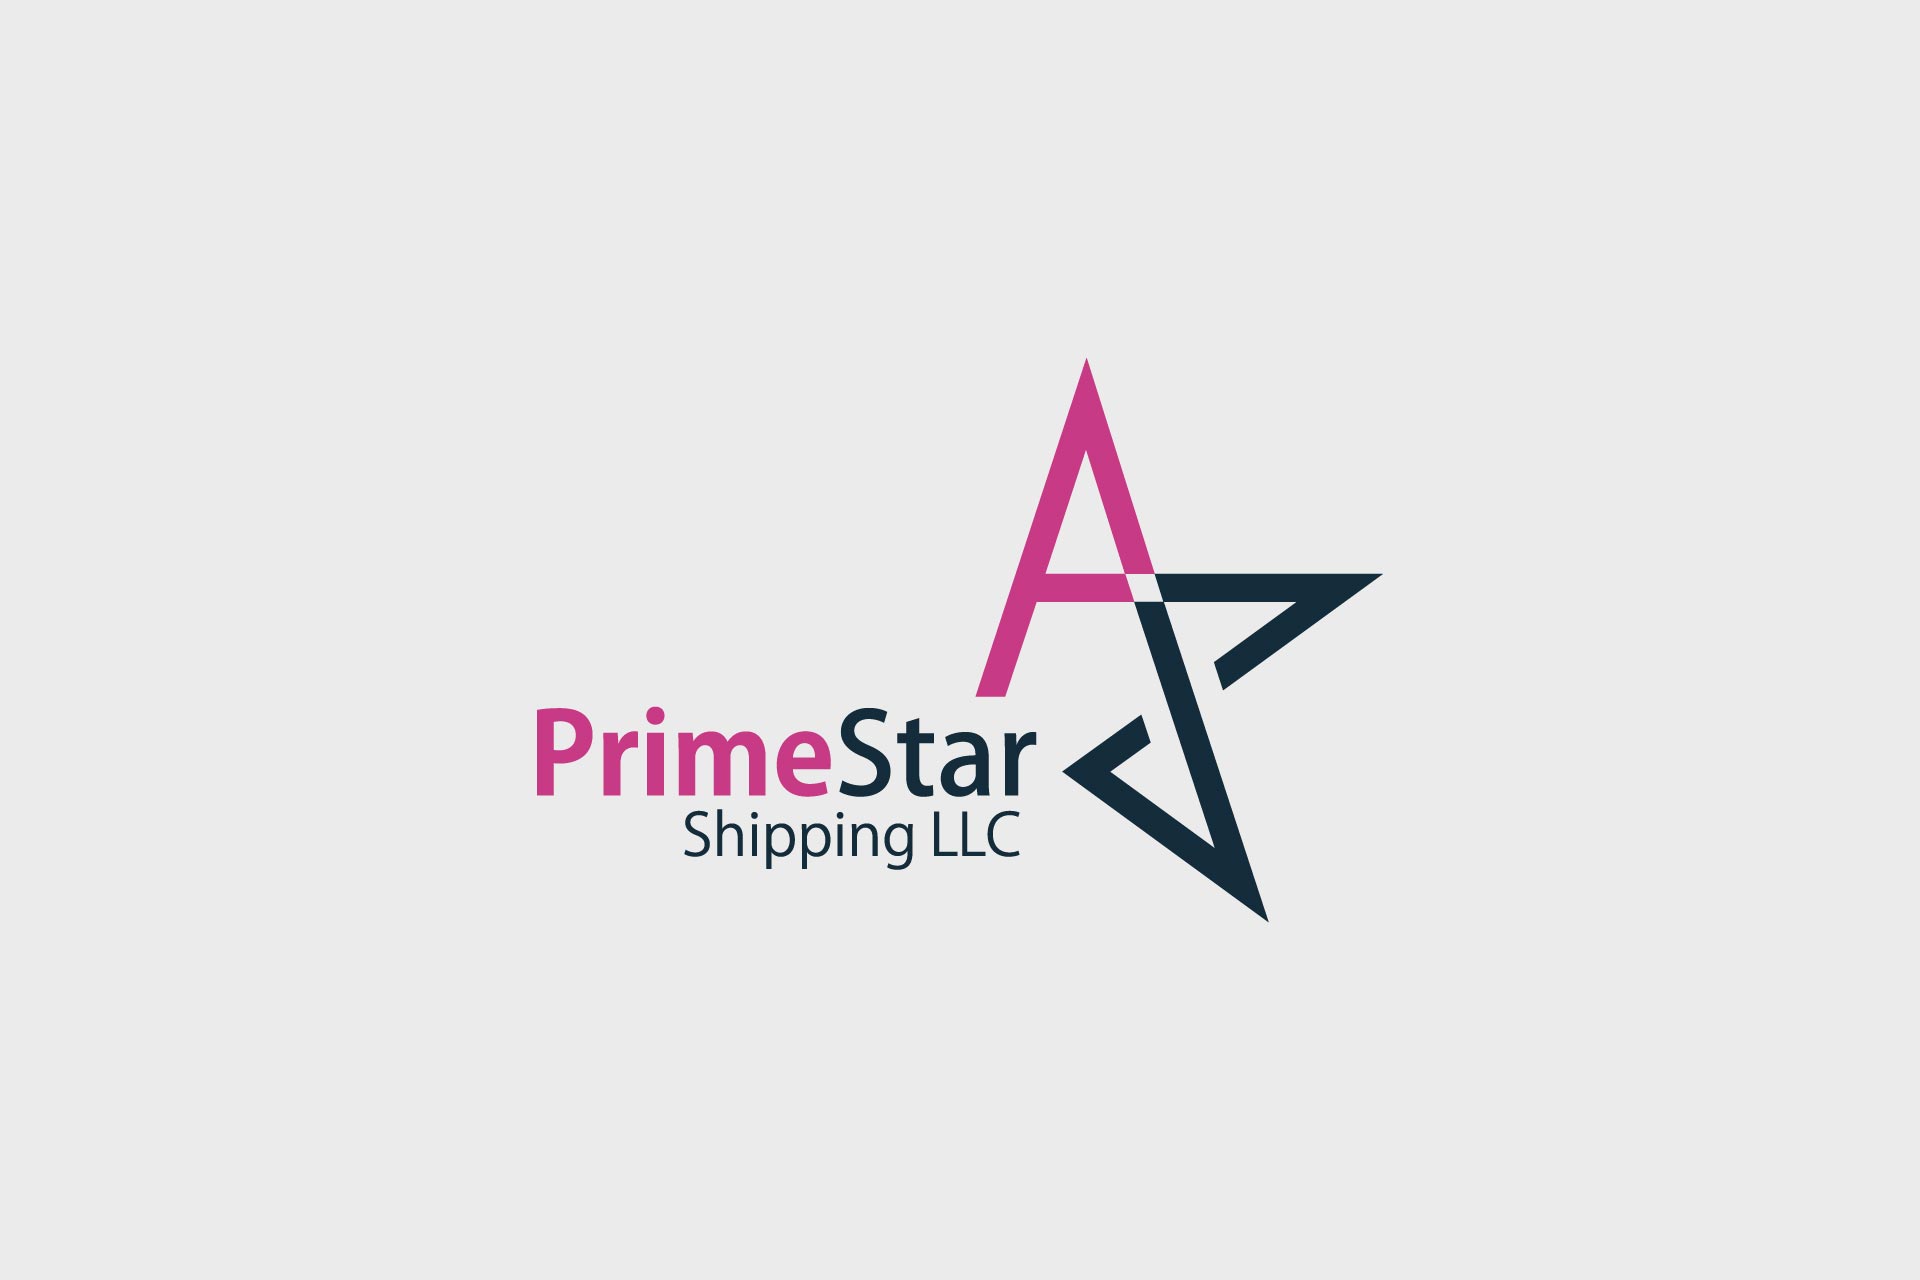 Prime Star Shipping